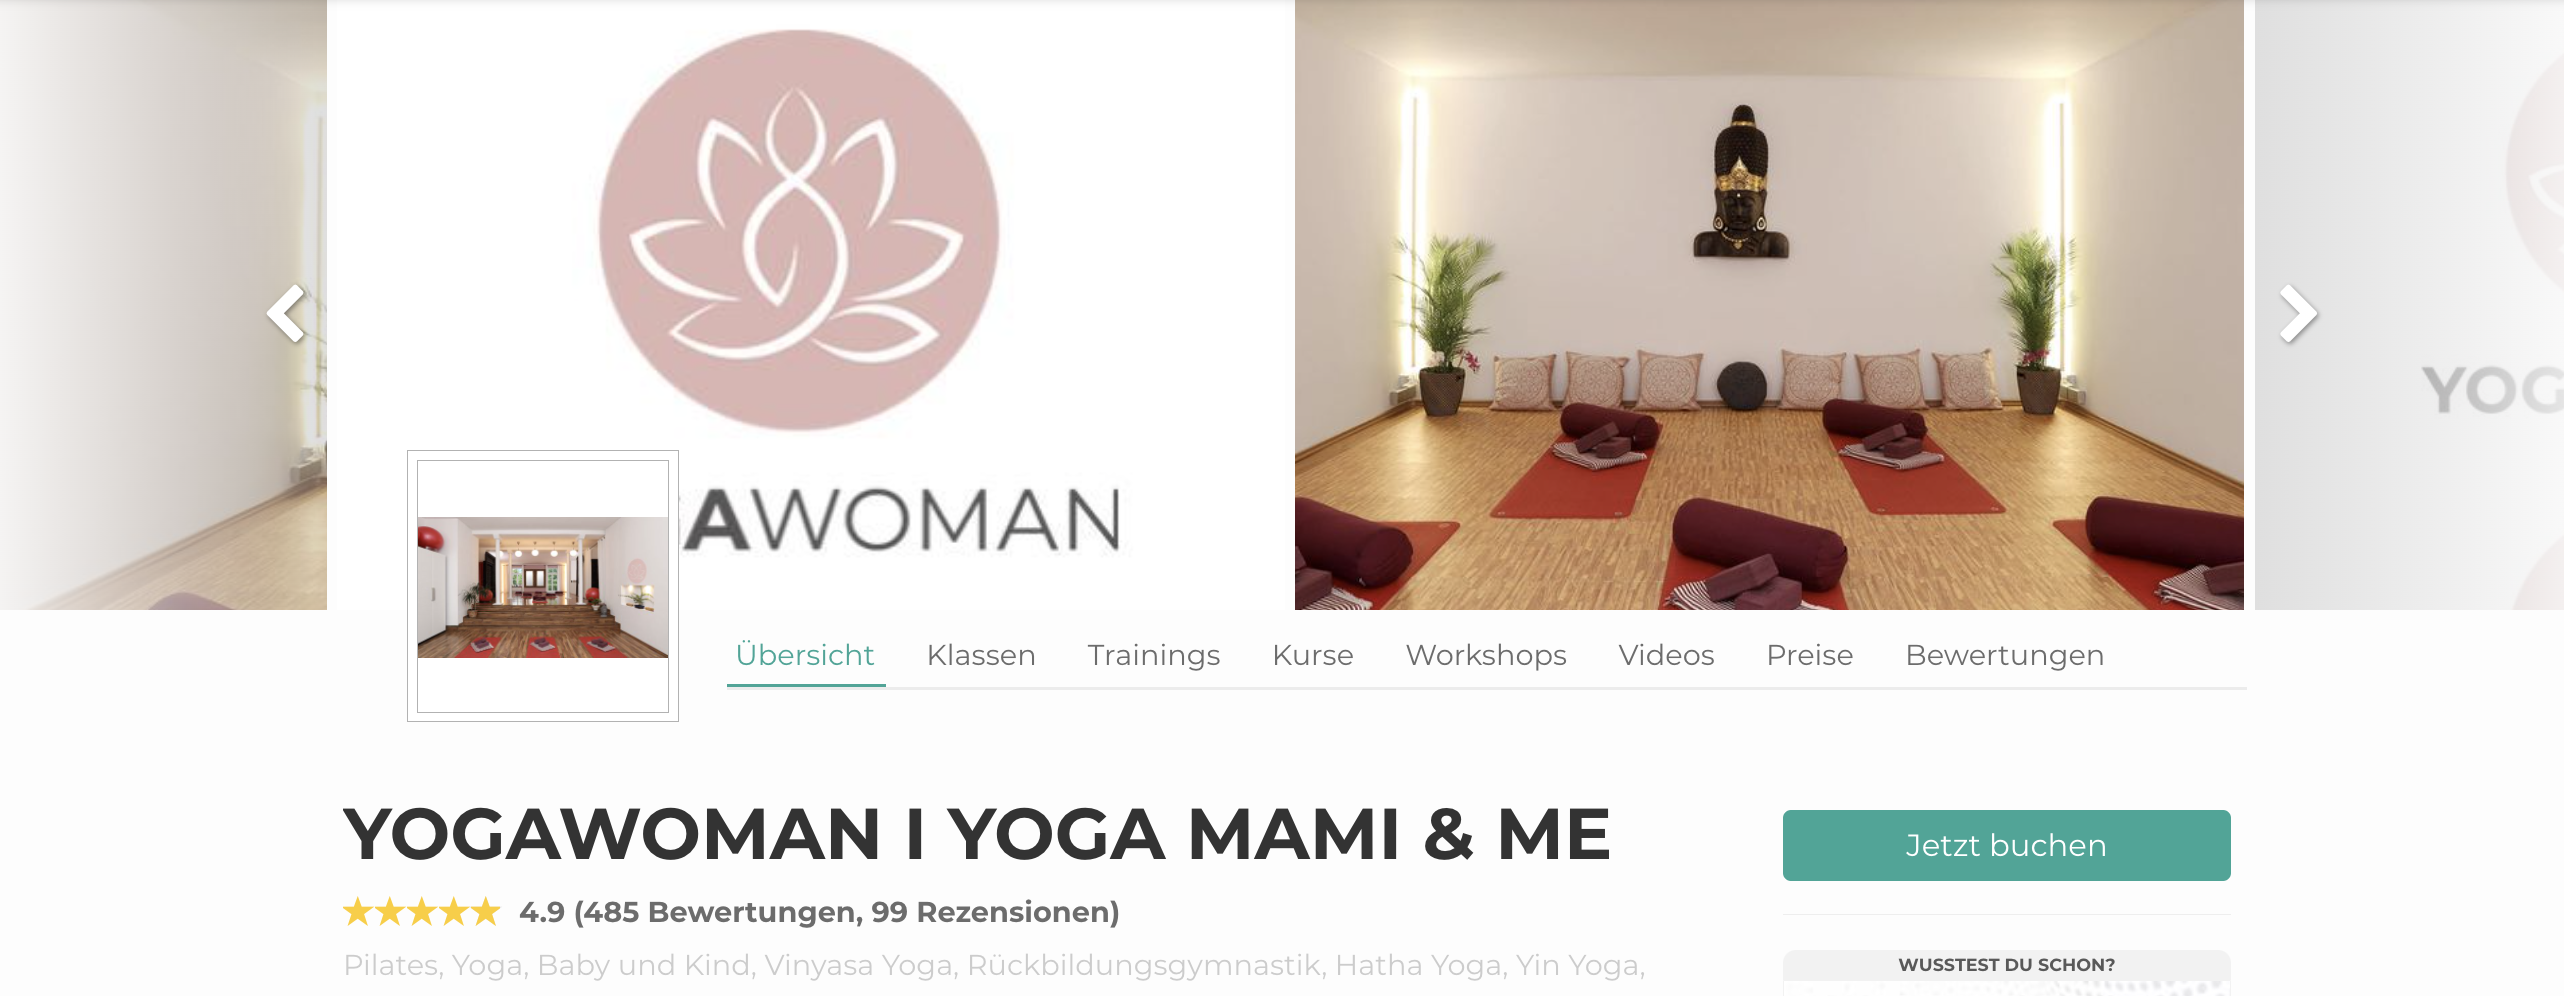 Yogawoman ist top Yoga Studio in München